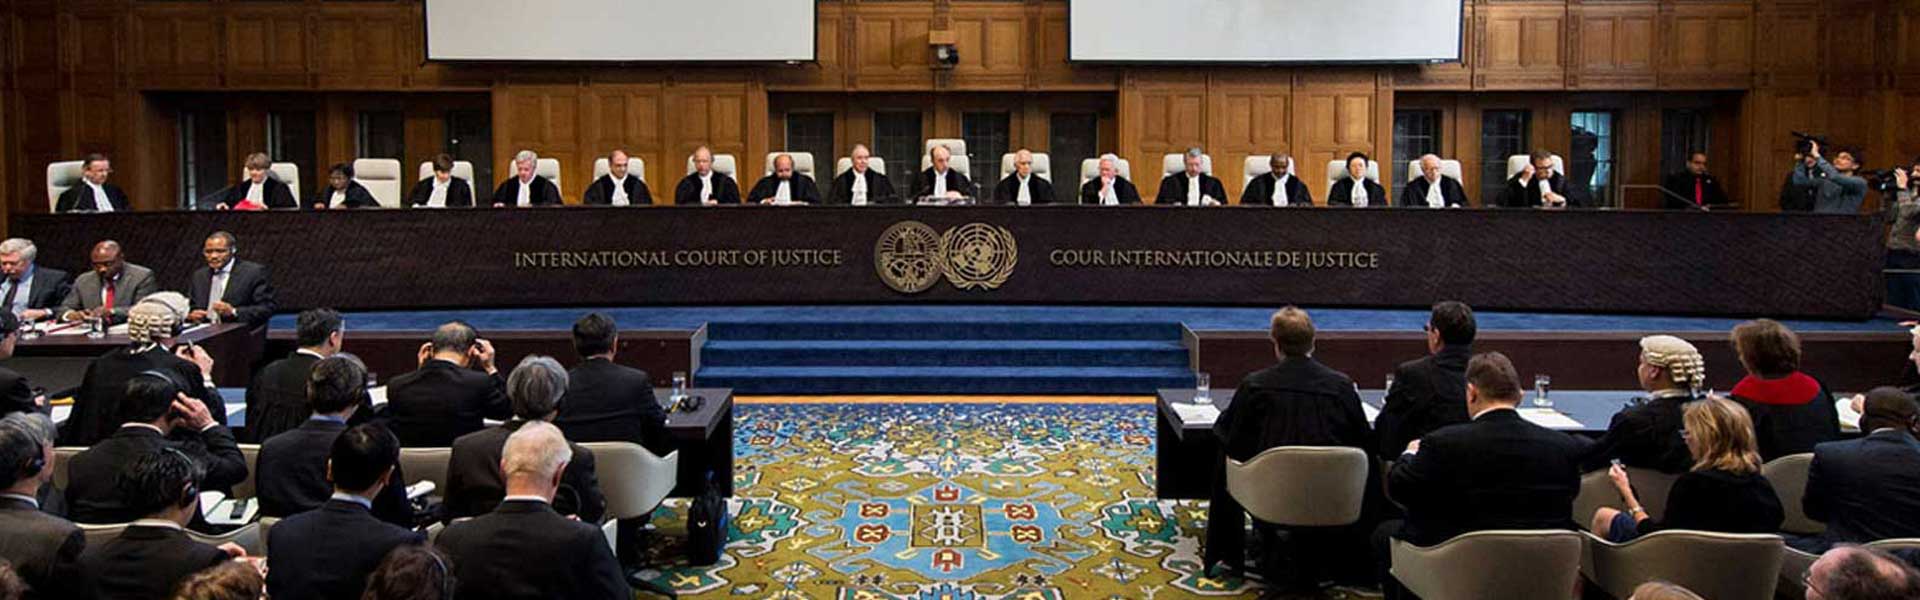 international court justice